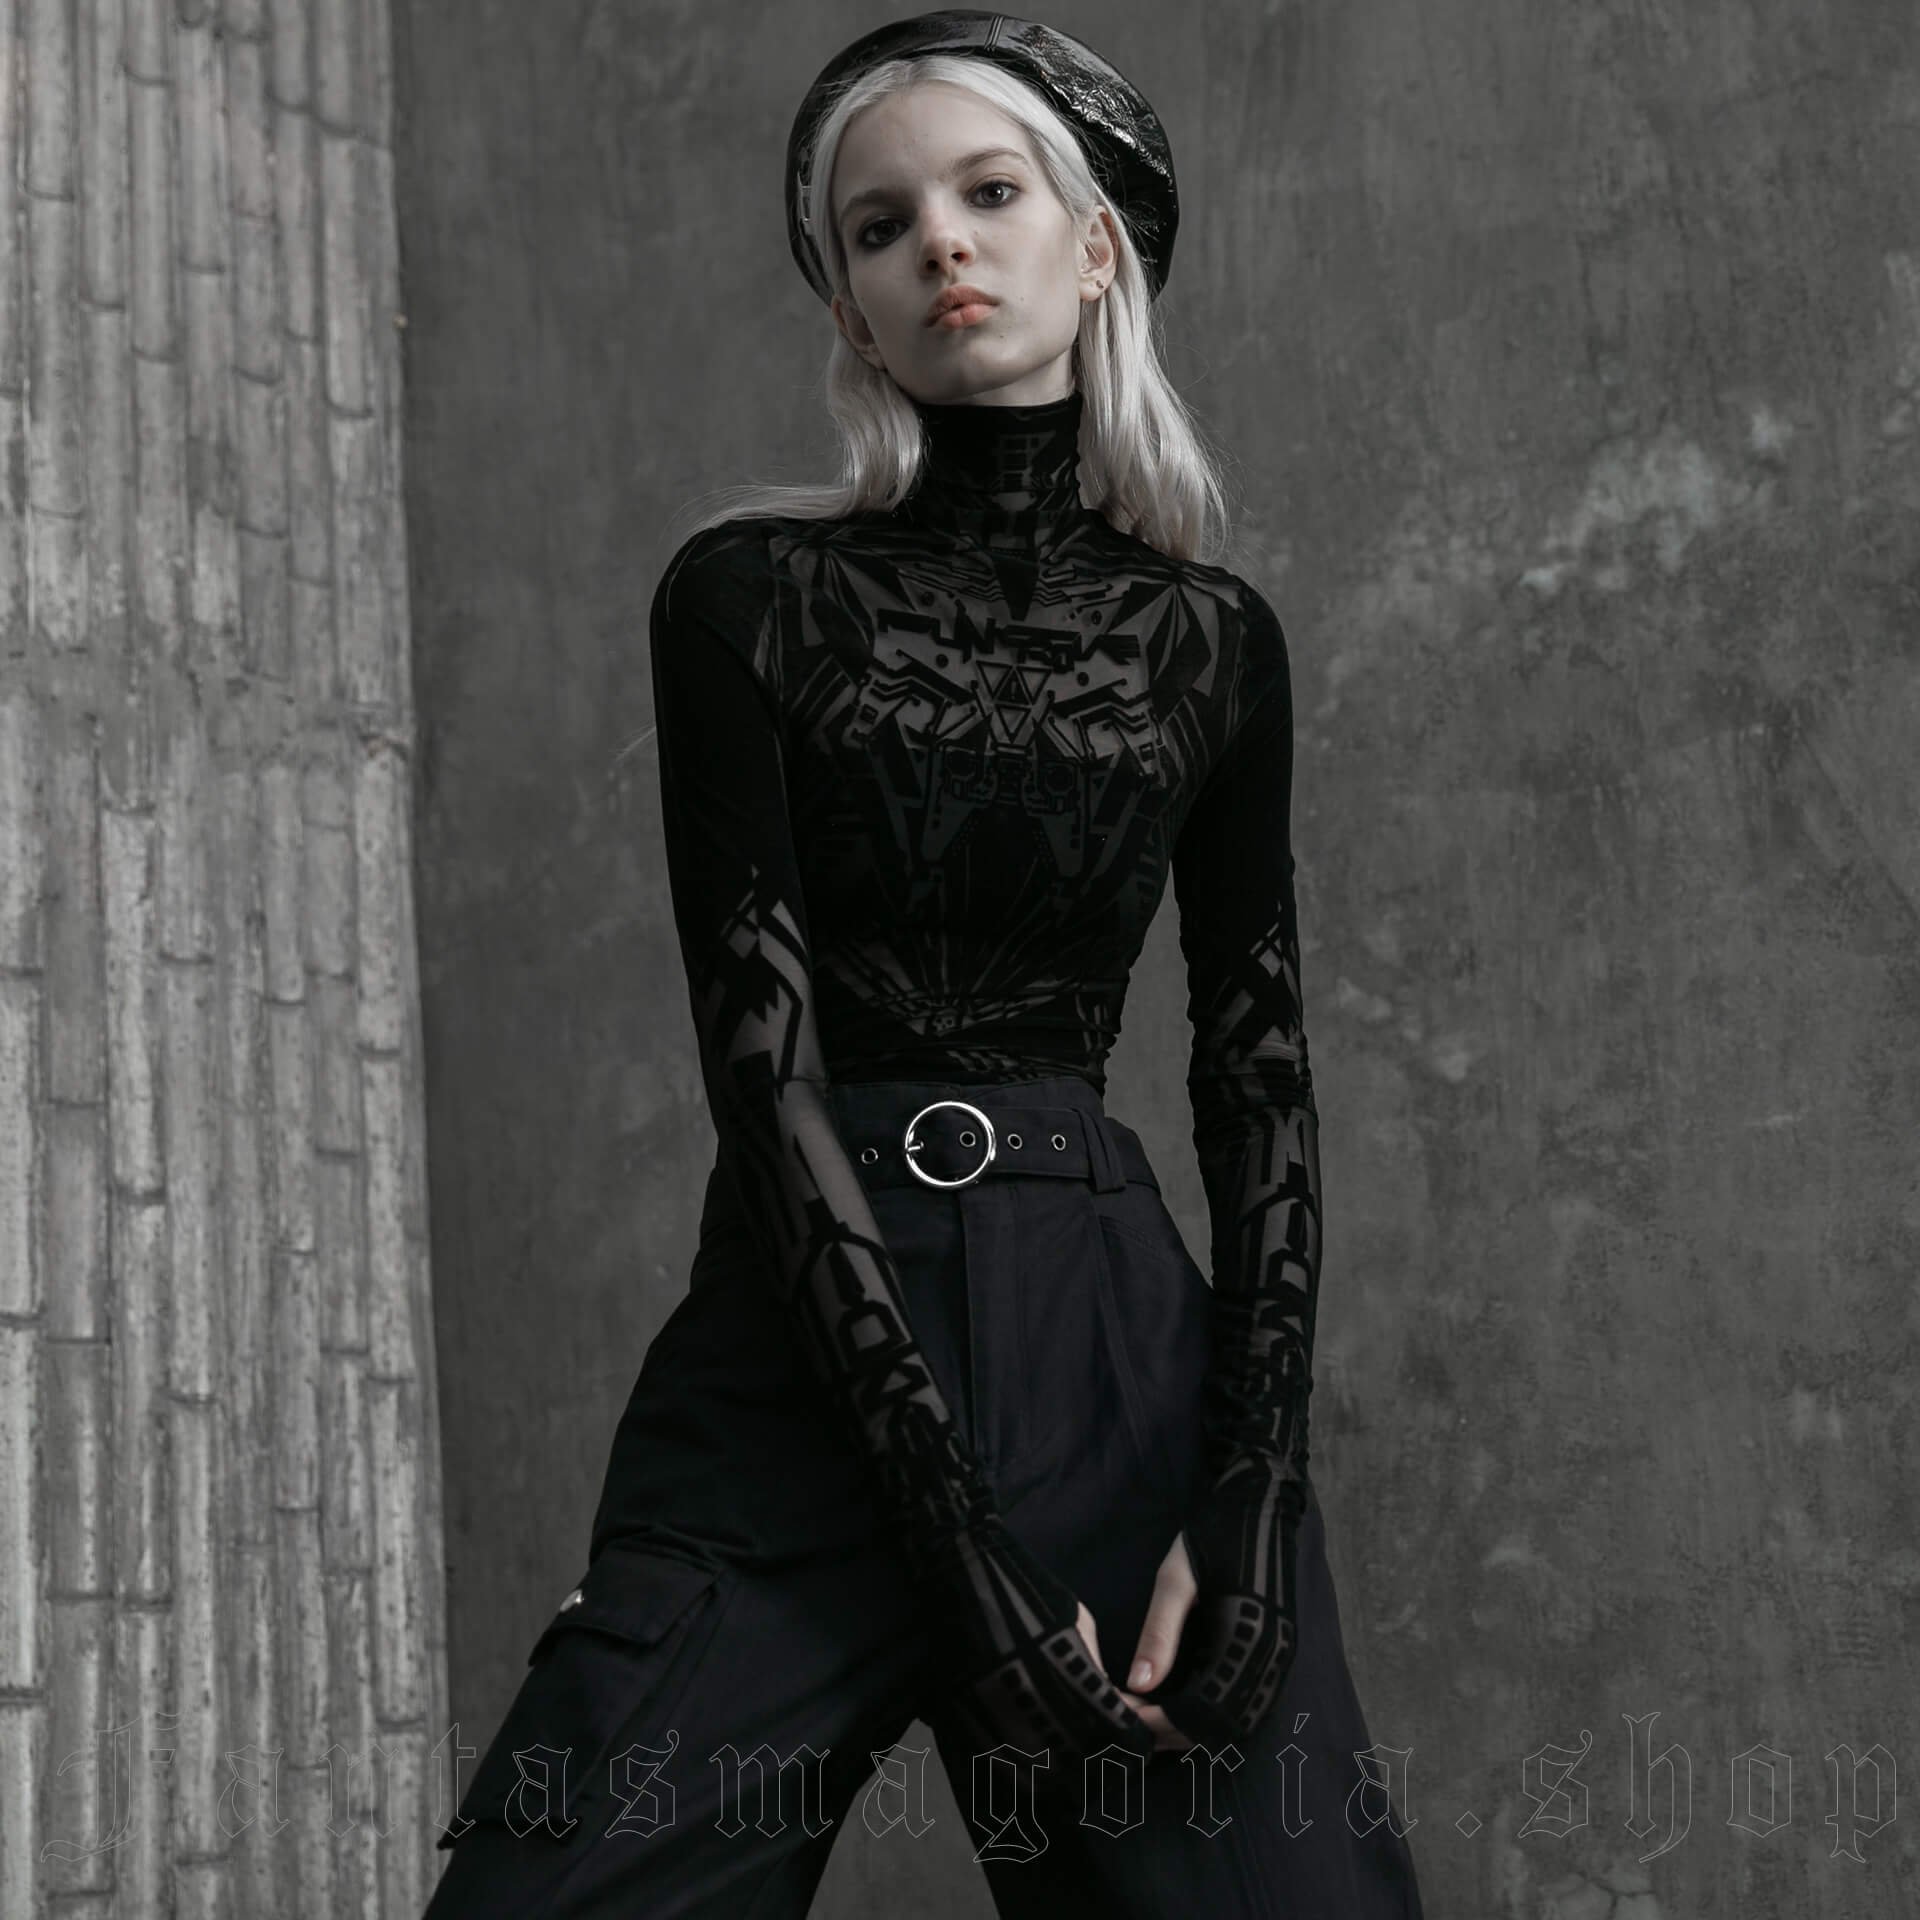 Women's Gothic Sheer Mesh Top – Punk Design